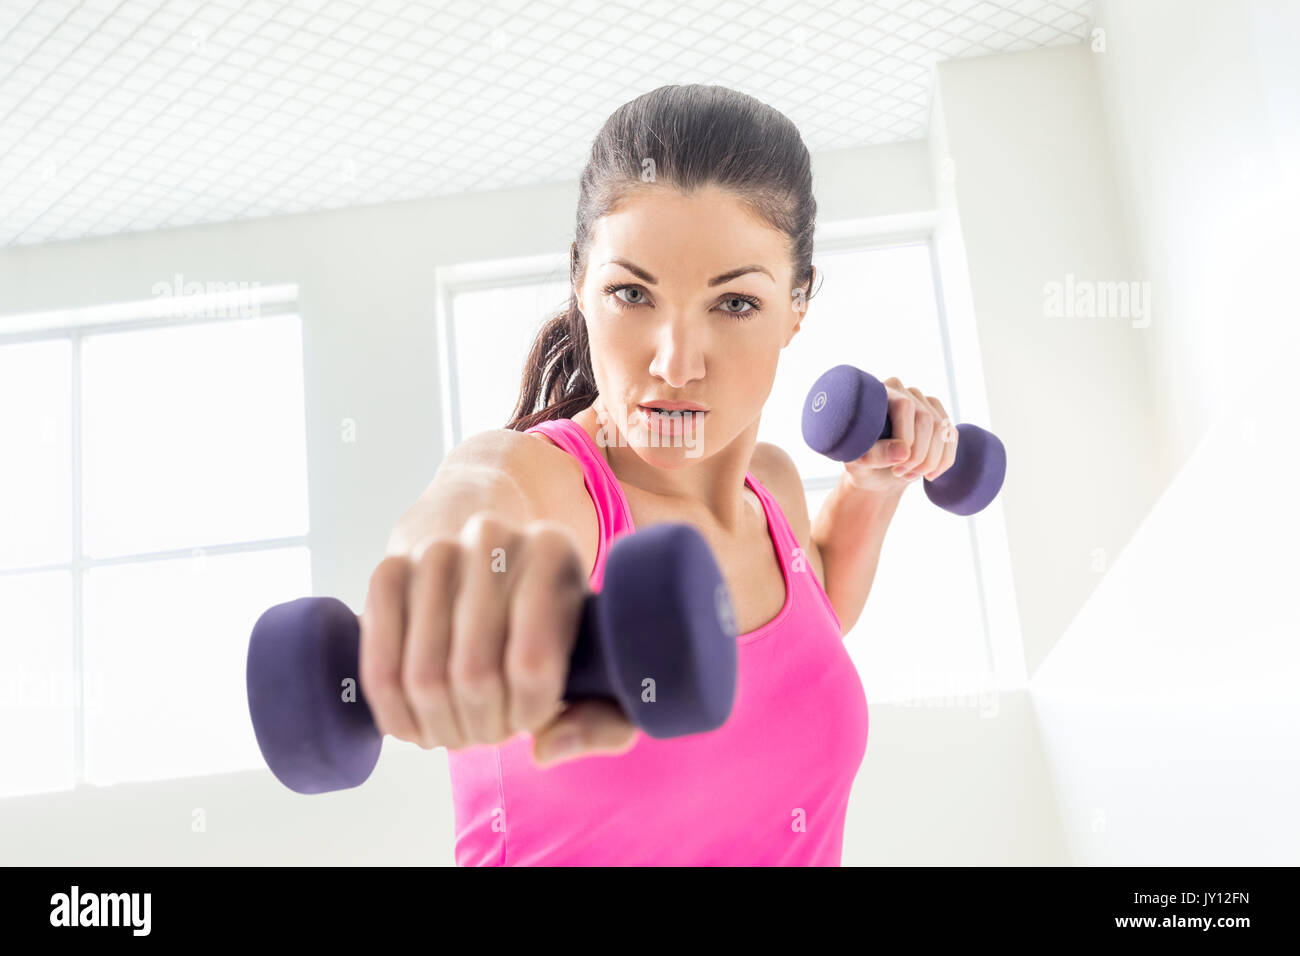 Caucasian woman lifting weights Stock Photo